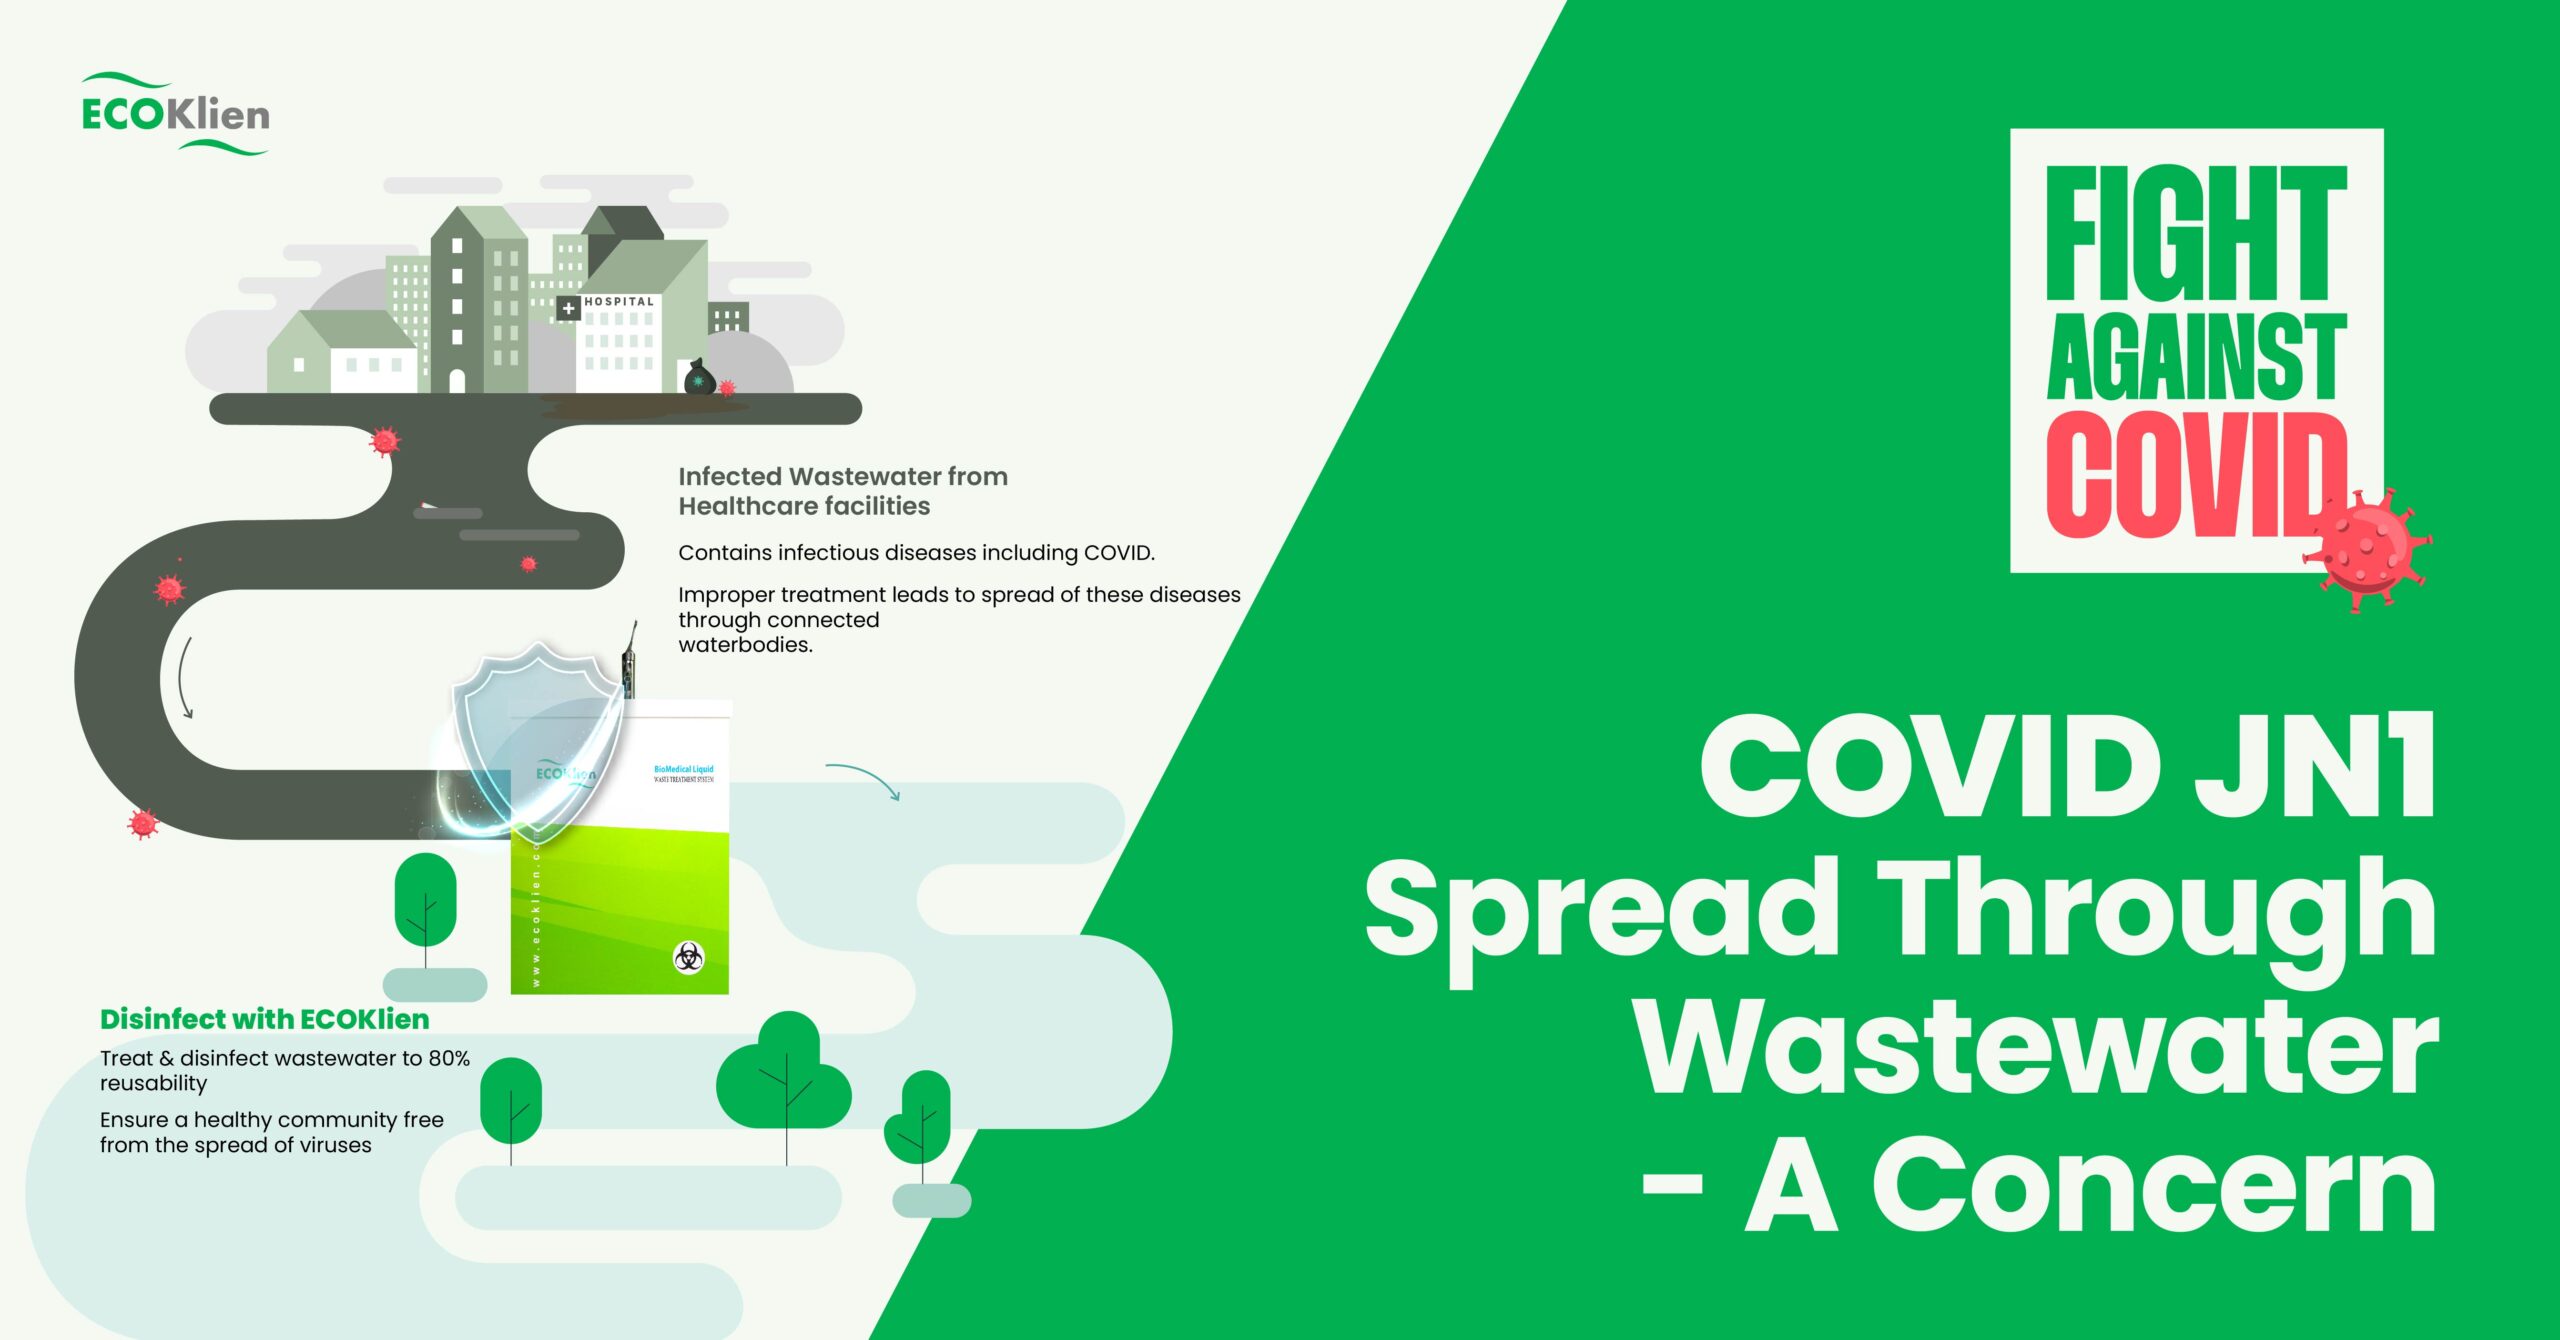 Covid Jn1 spread through wastewater - a concern